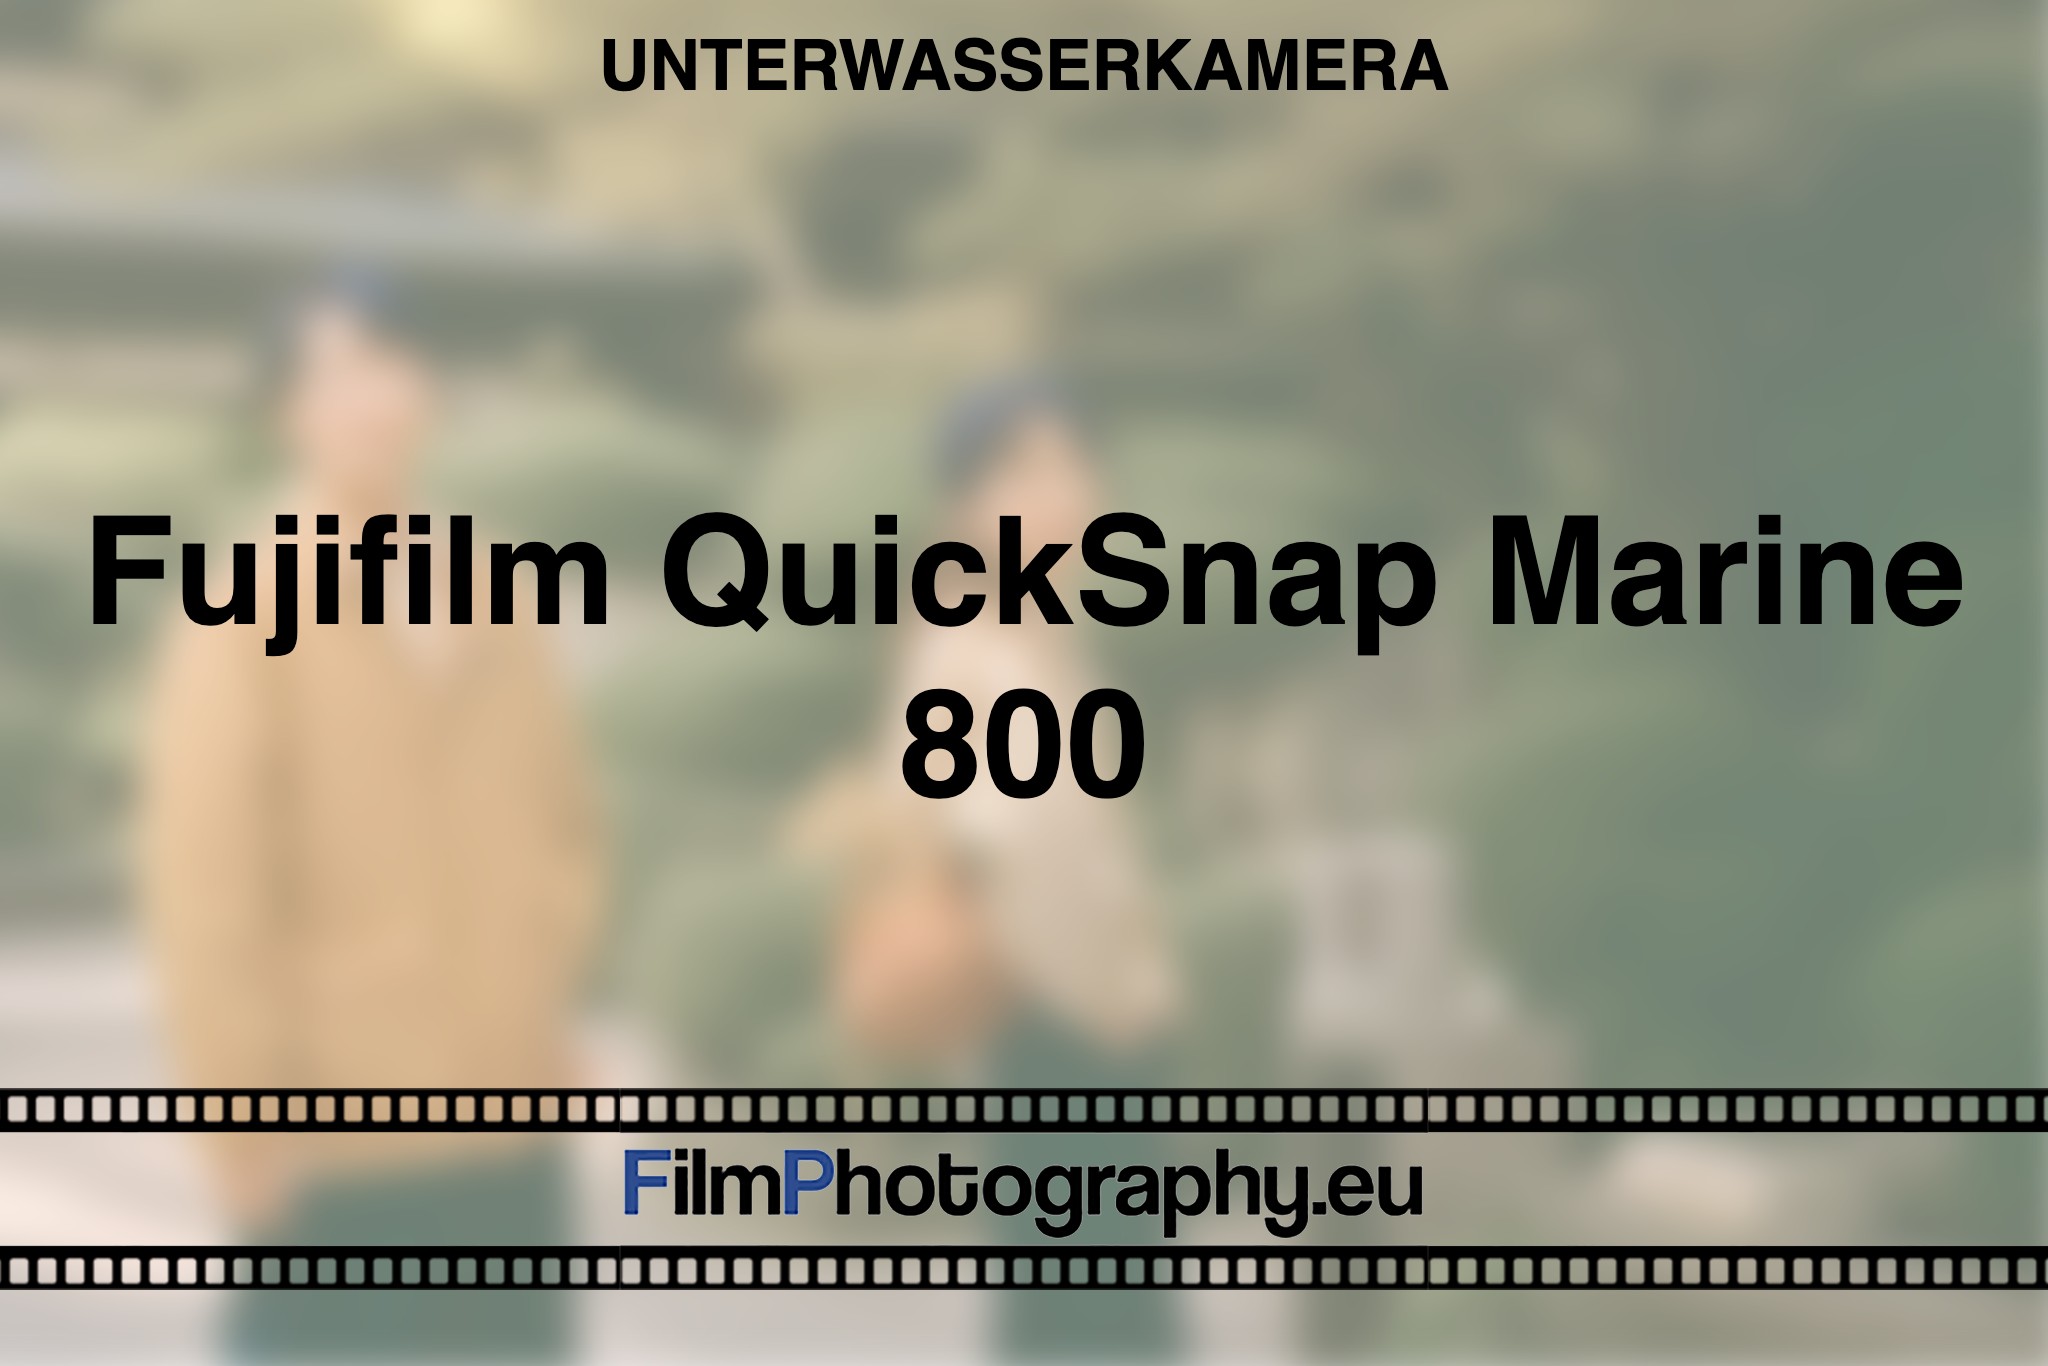 fujifilm-quicksnap-marine-800-unterwasserkamera-bnv